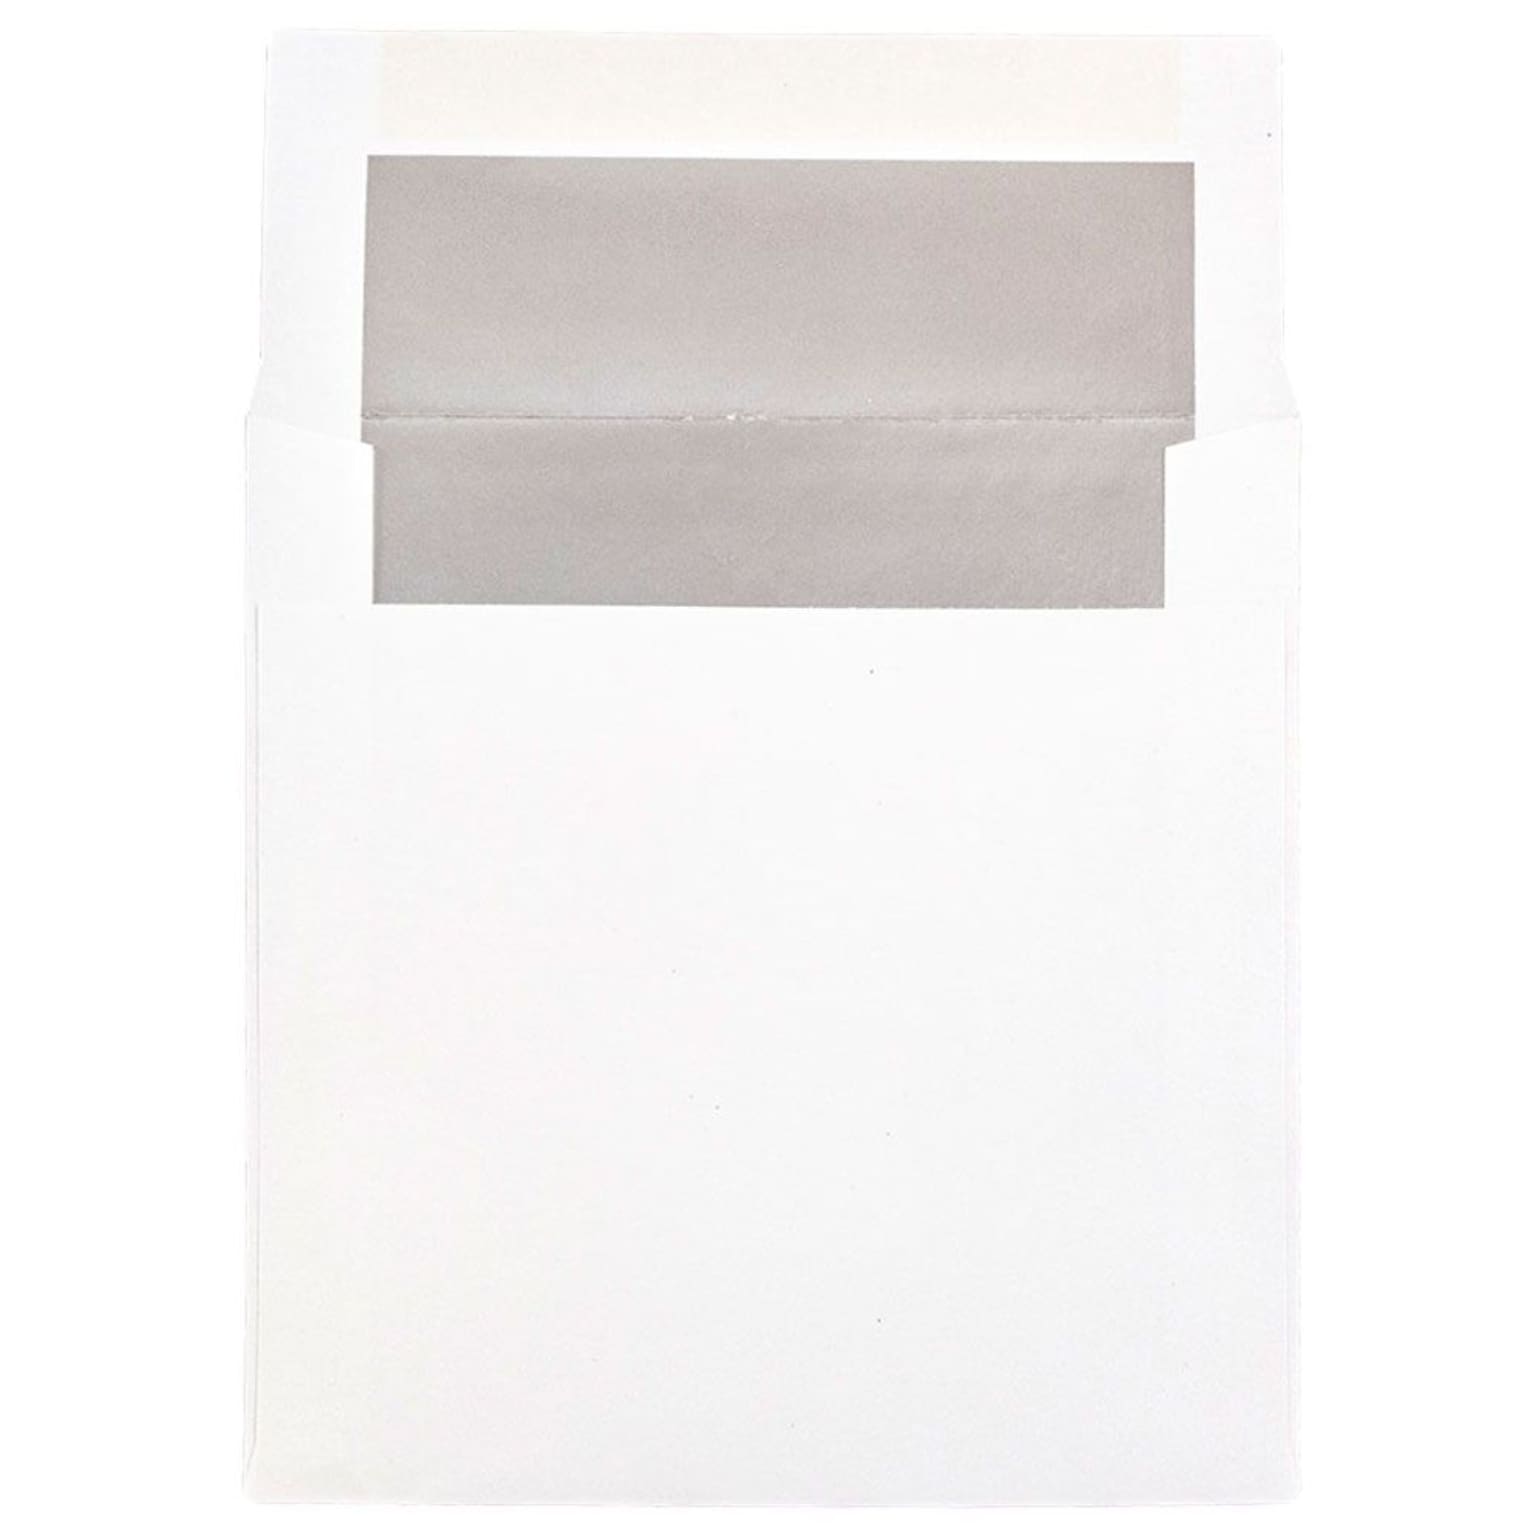 JAM Paper 6 x 6 Square Foil Lined Invitation Envelopes, White with Silver Foil, 25/Pack (3244688)